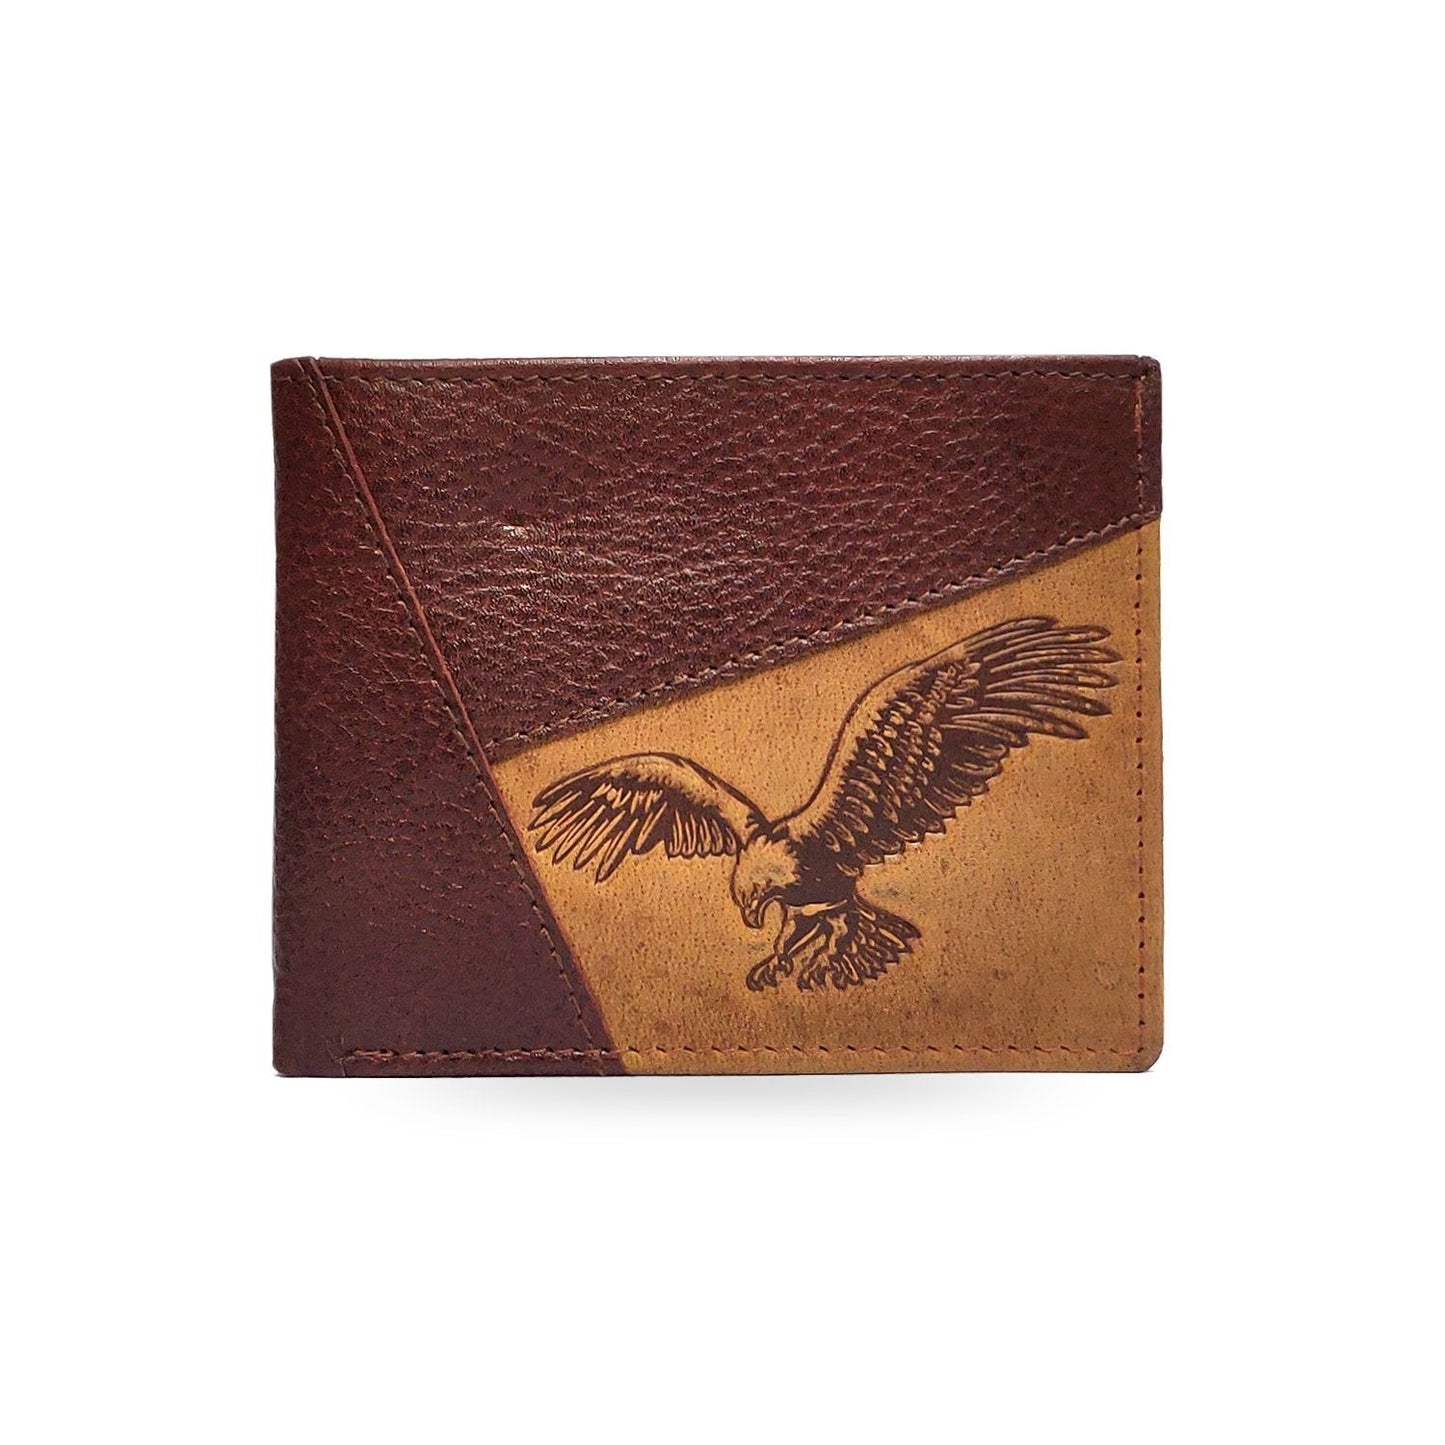 Brahma Bull Eagle Brown Leather Wallet - Brahma Bull - Men's Grooming